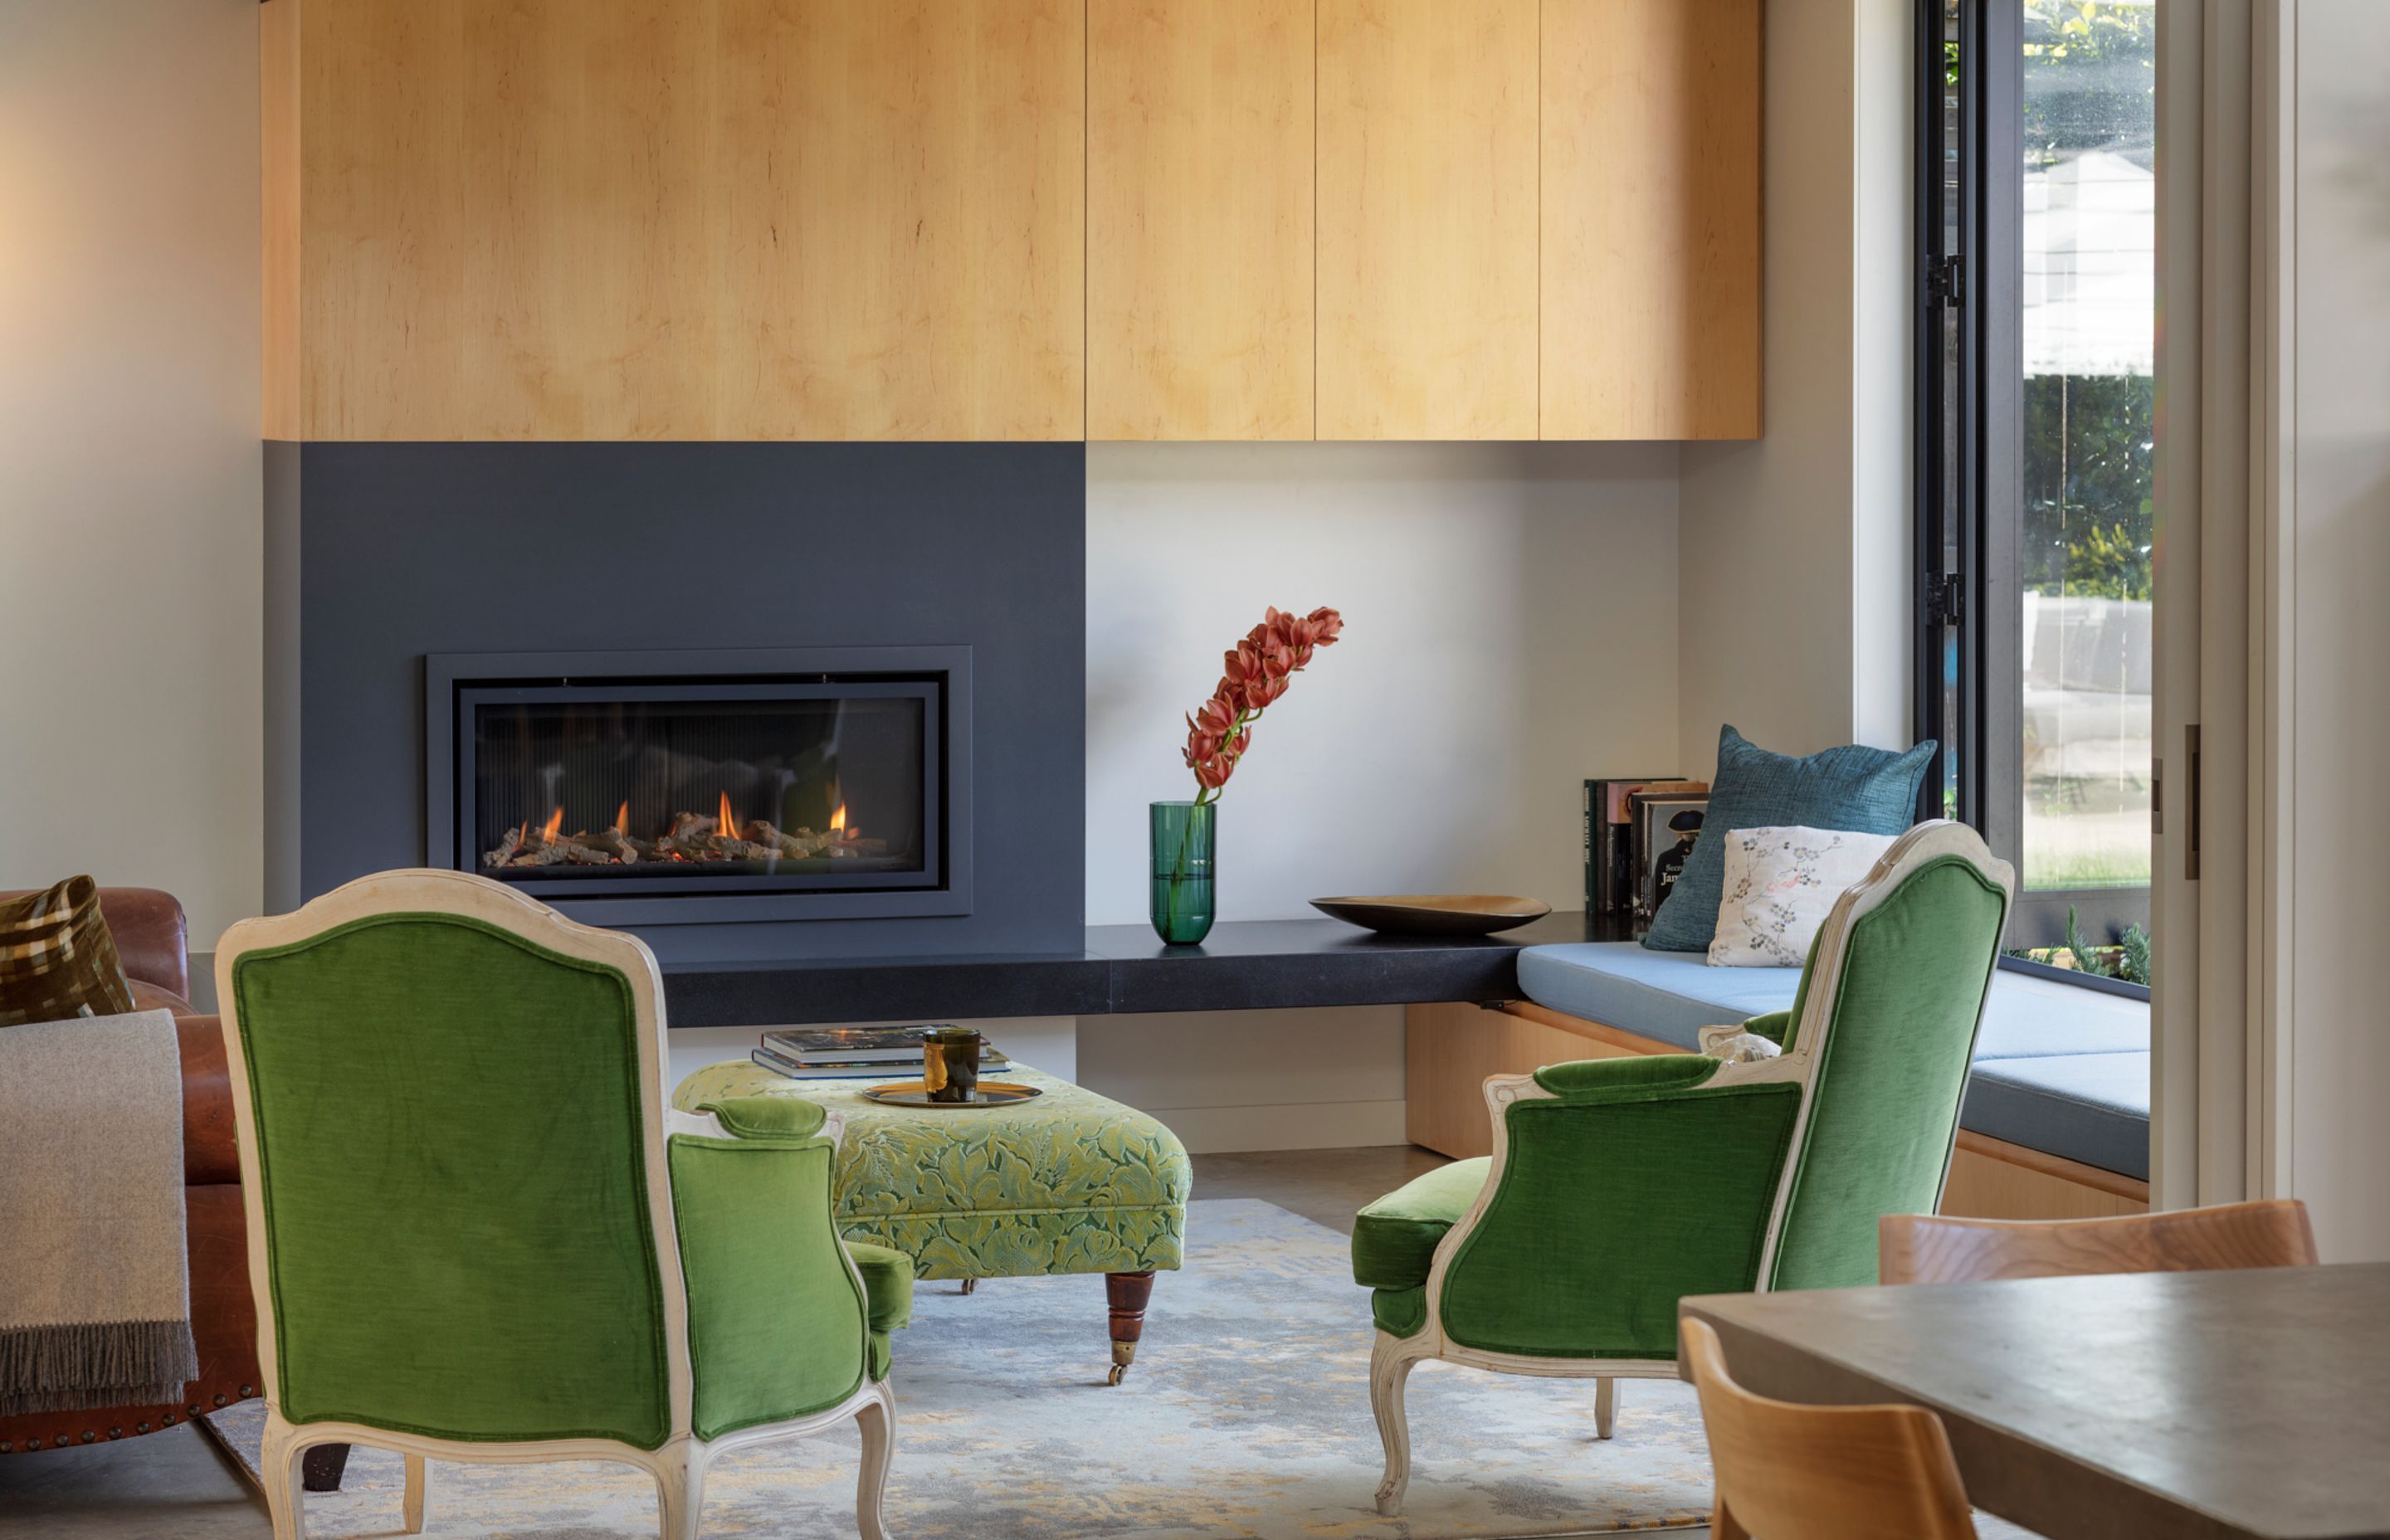 Devonport villa renovation by Scarlet Architects, with interior design by Yvette Jay.